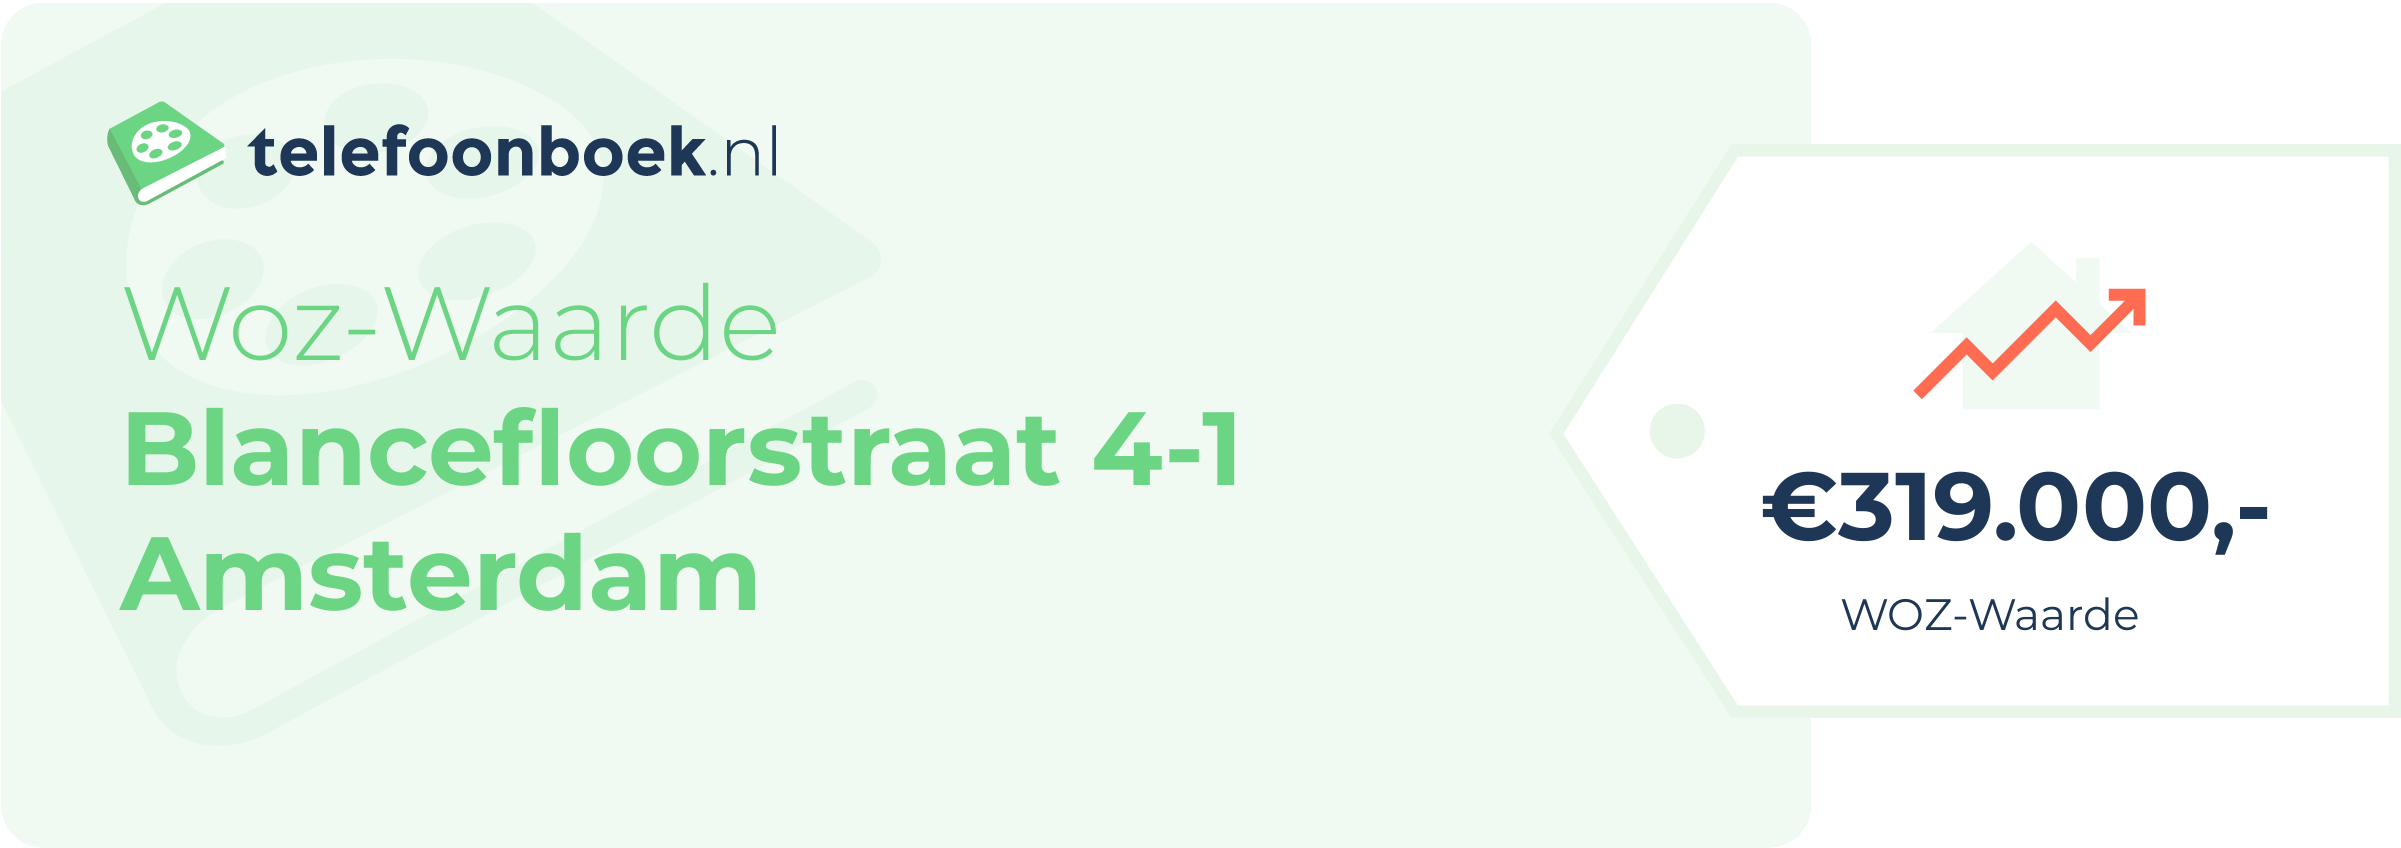 WOZ-waarde Blancefloorstraat 4-1 Amsterdam